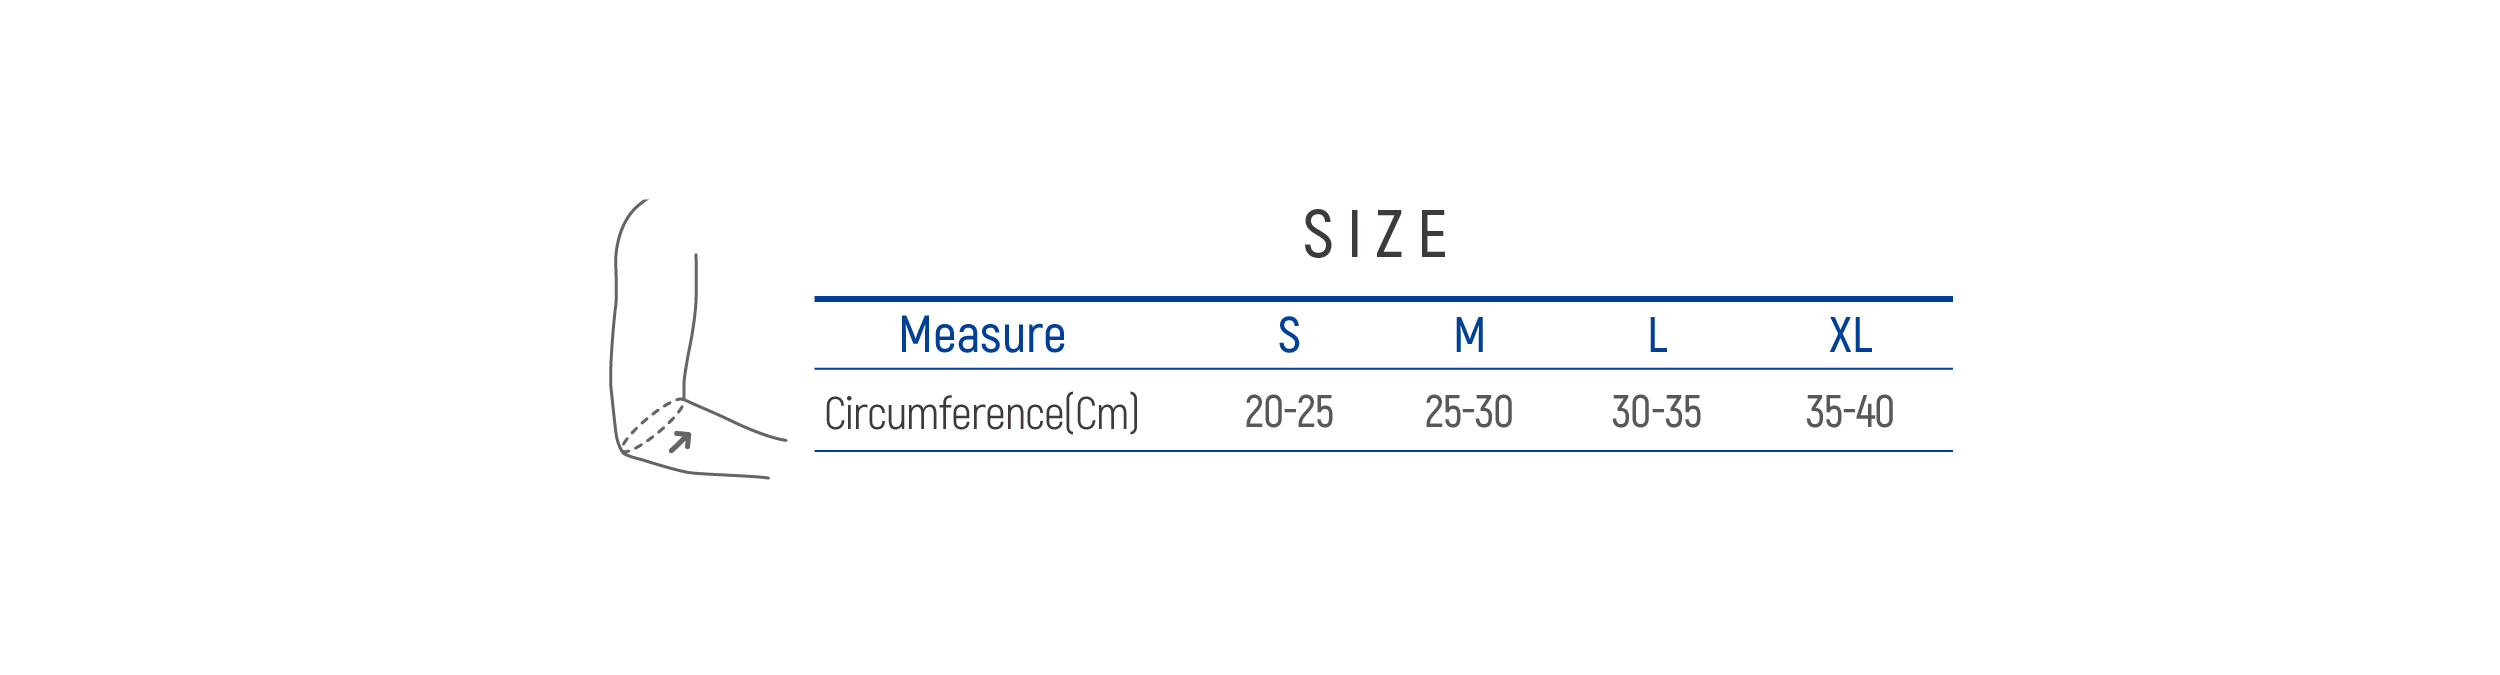 DR-E003 Size table image